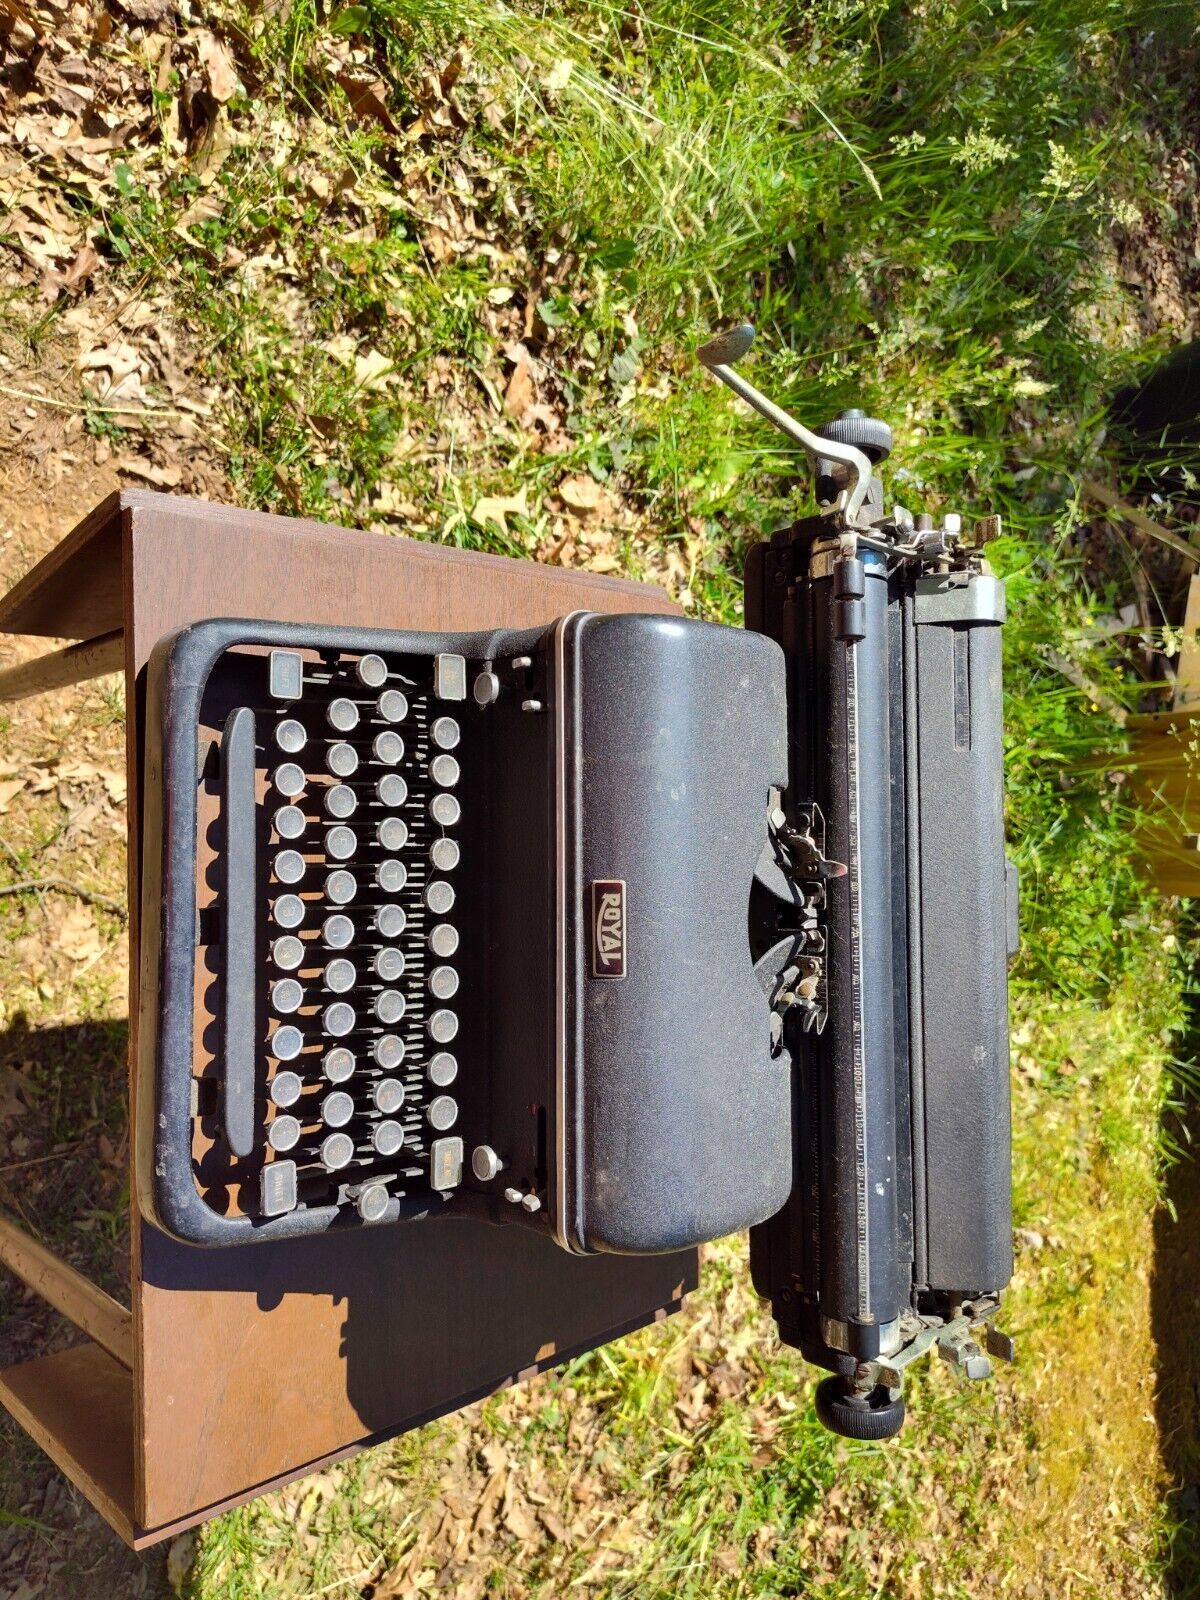 Adler Royal Epoch Manual Portable Black Typewriter 79100G